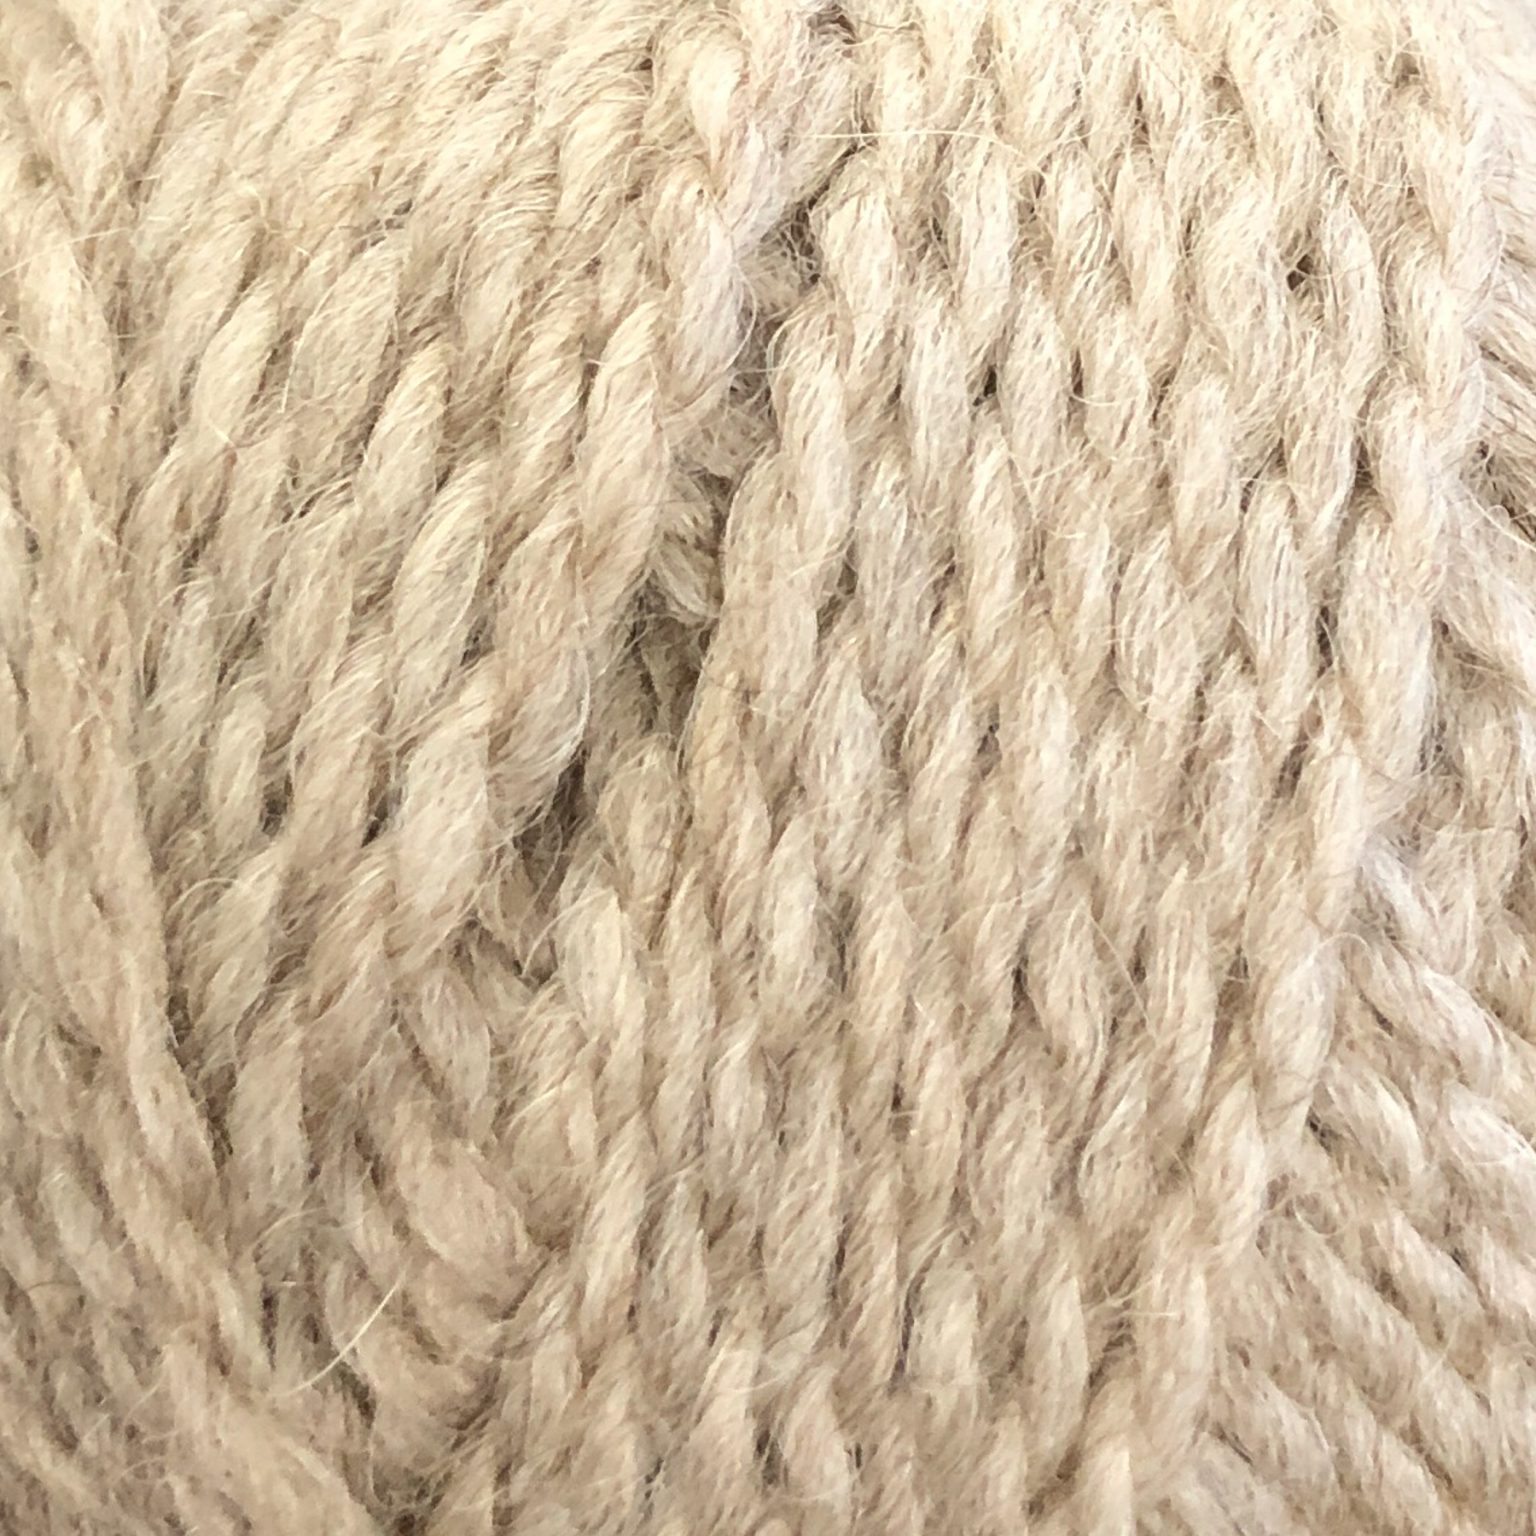 FIBRESPACE NZ Inca Spun Worsted | 10ply Alpaca, Fine Wool Blend buy kiwi yarn Undyed Beige 282